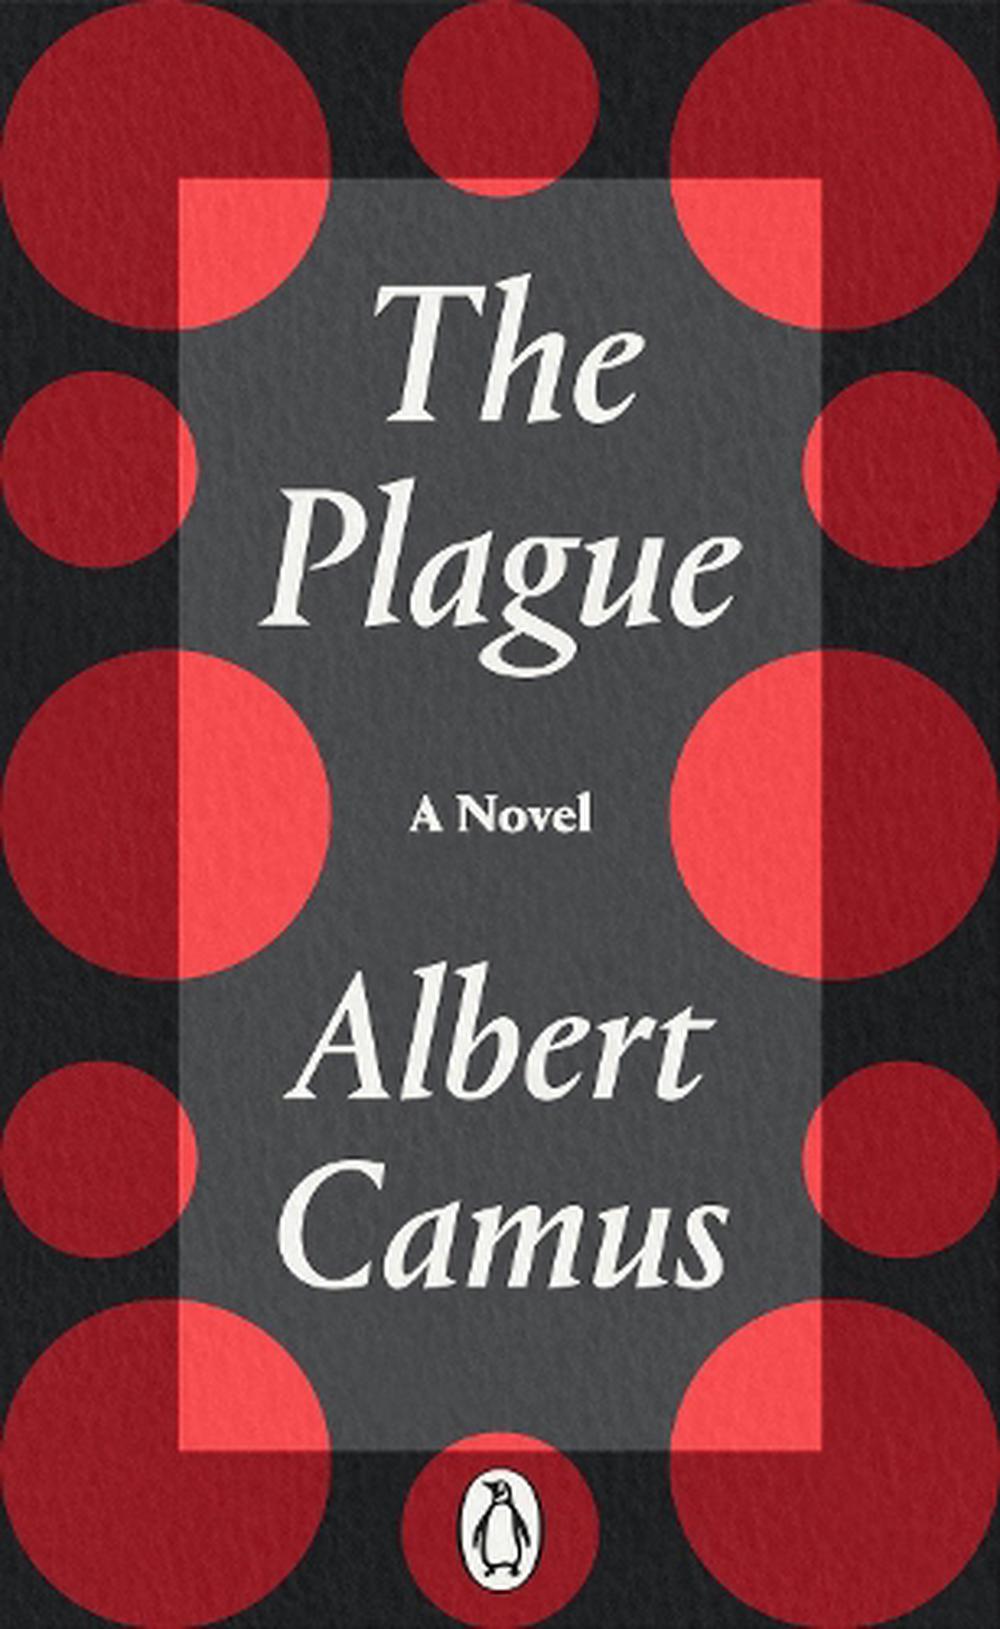 the plague book albert camus